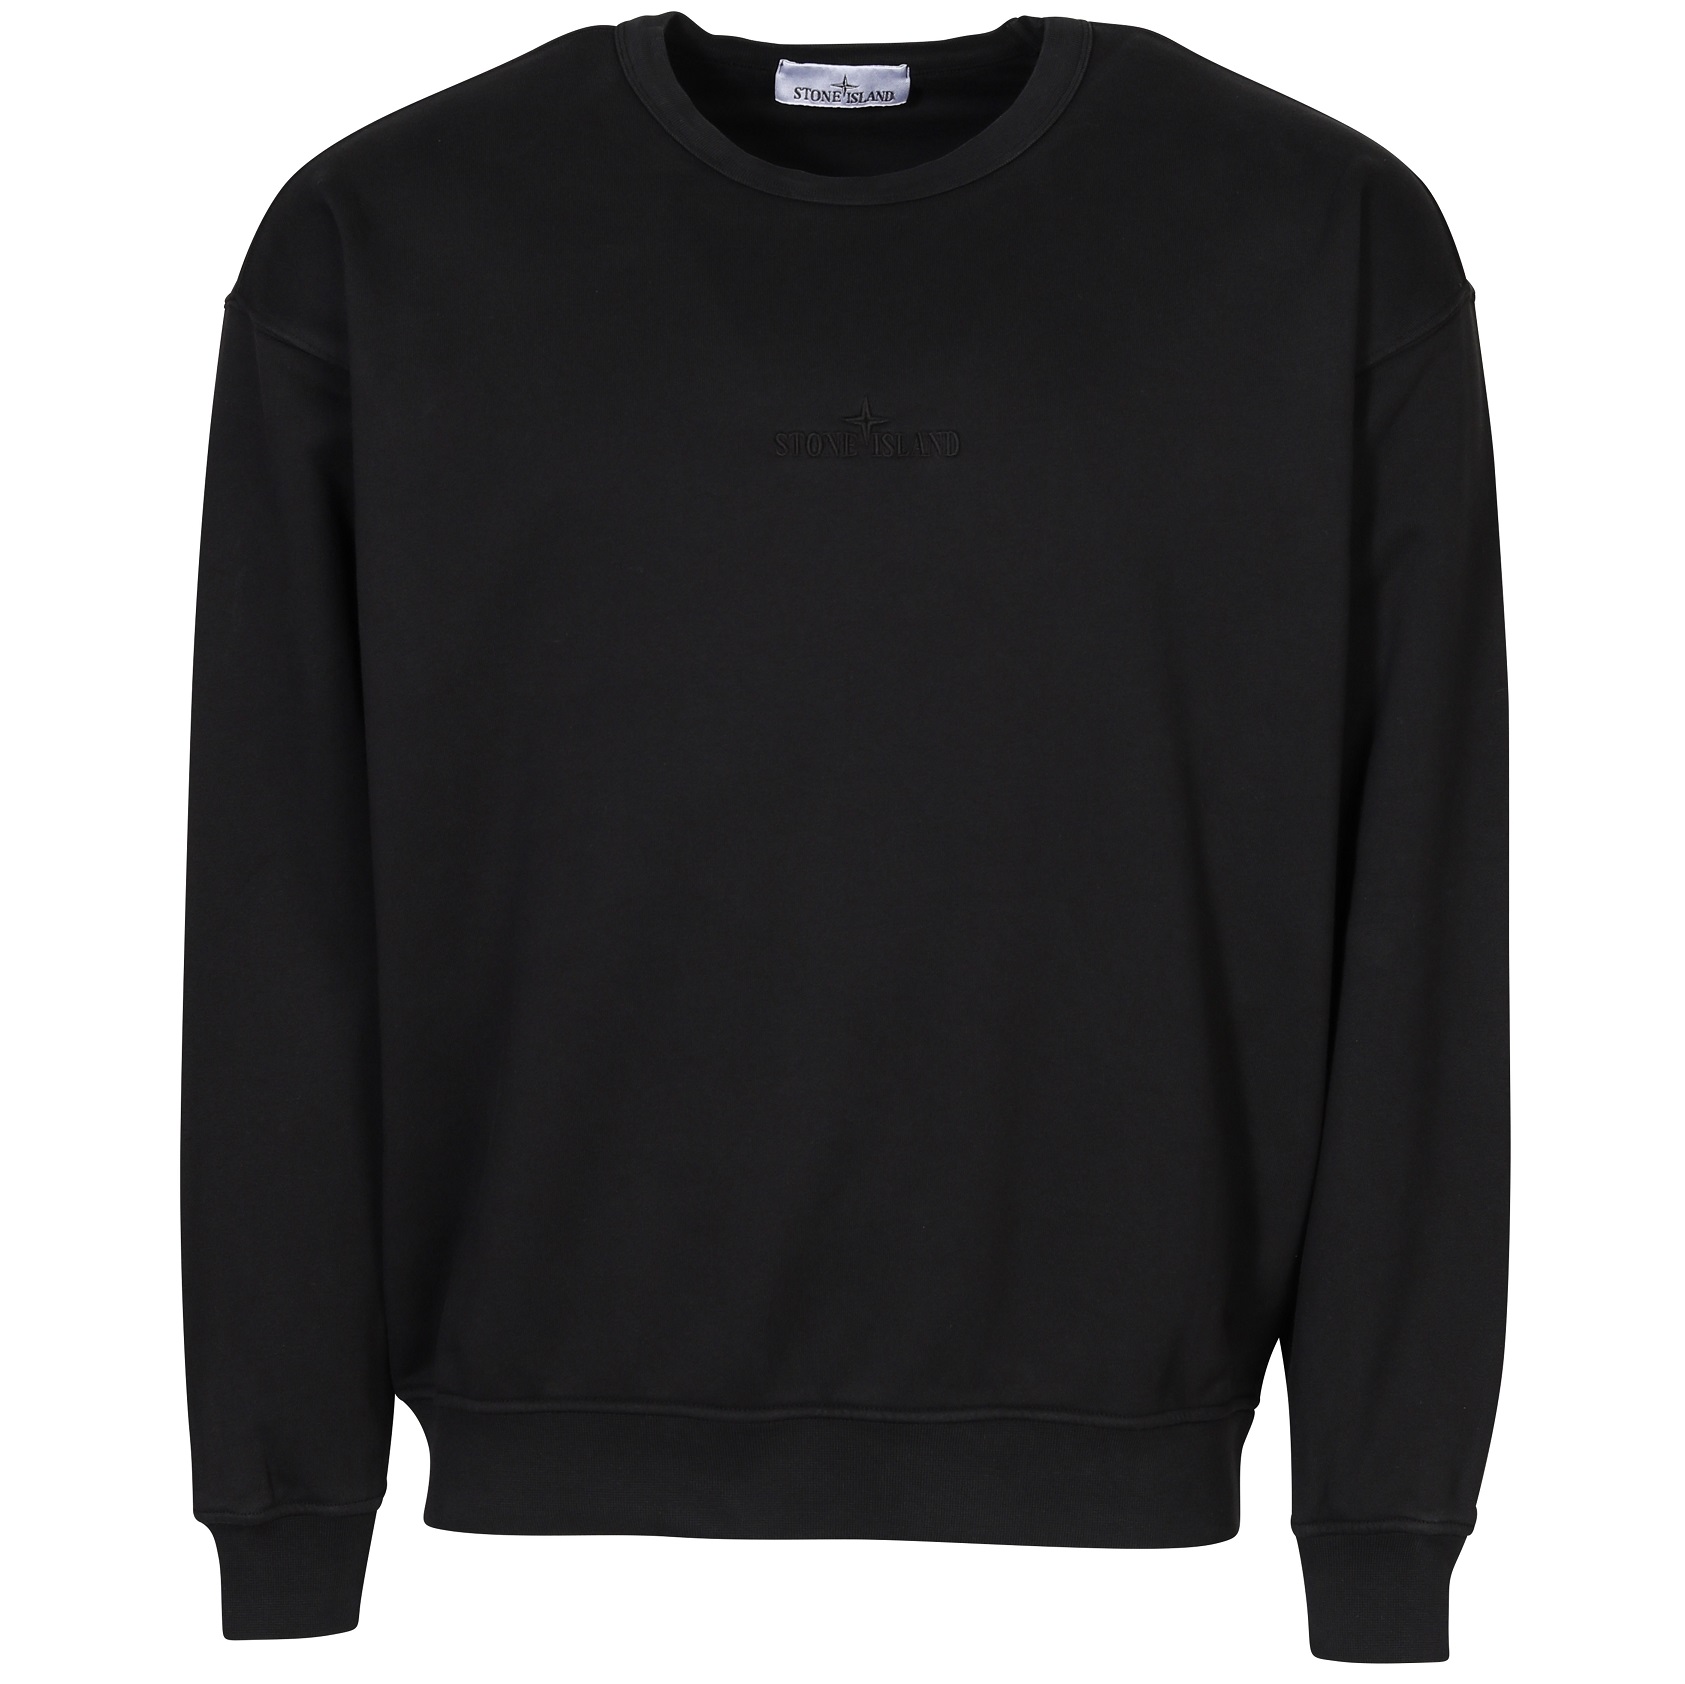 STONE ISLAND Oversize Stamp Sweatshirt in Black L